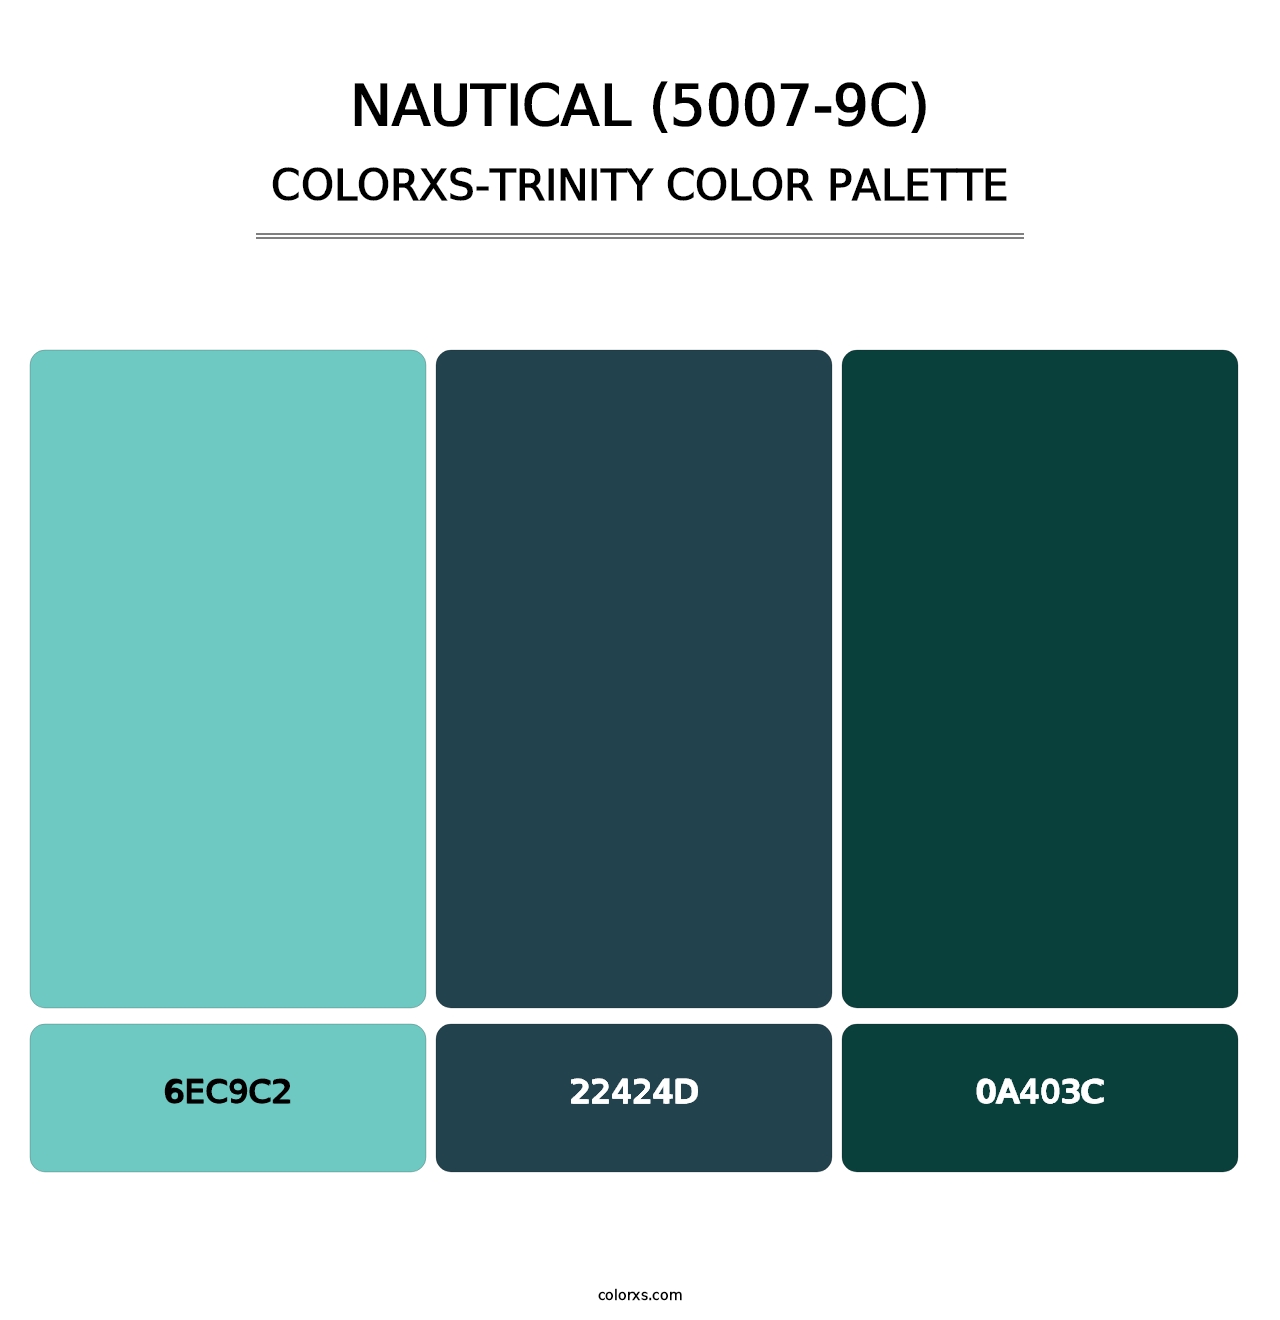 Nautical (5007-9C) - Colorxs Trinity Palette